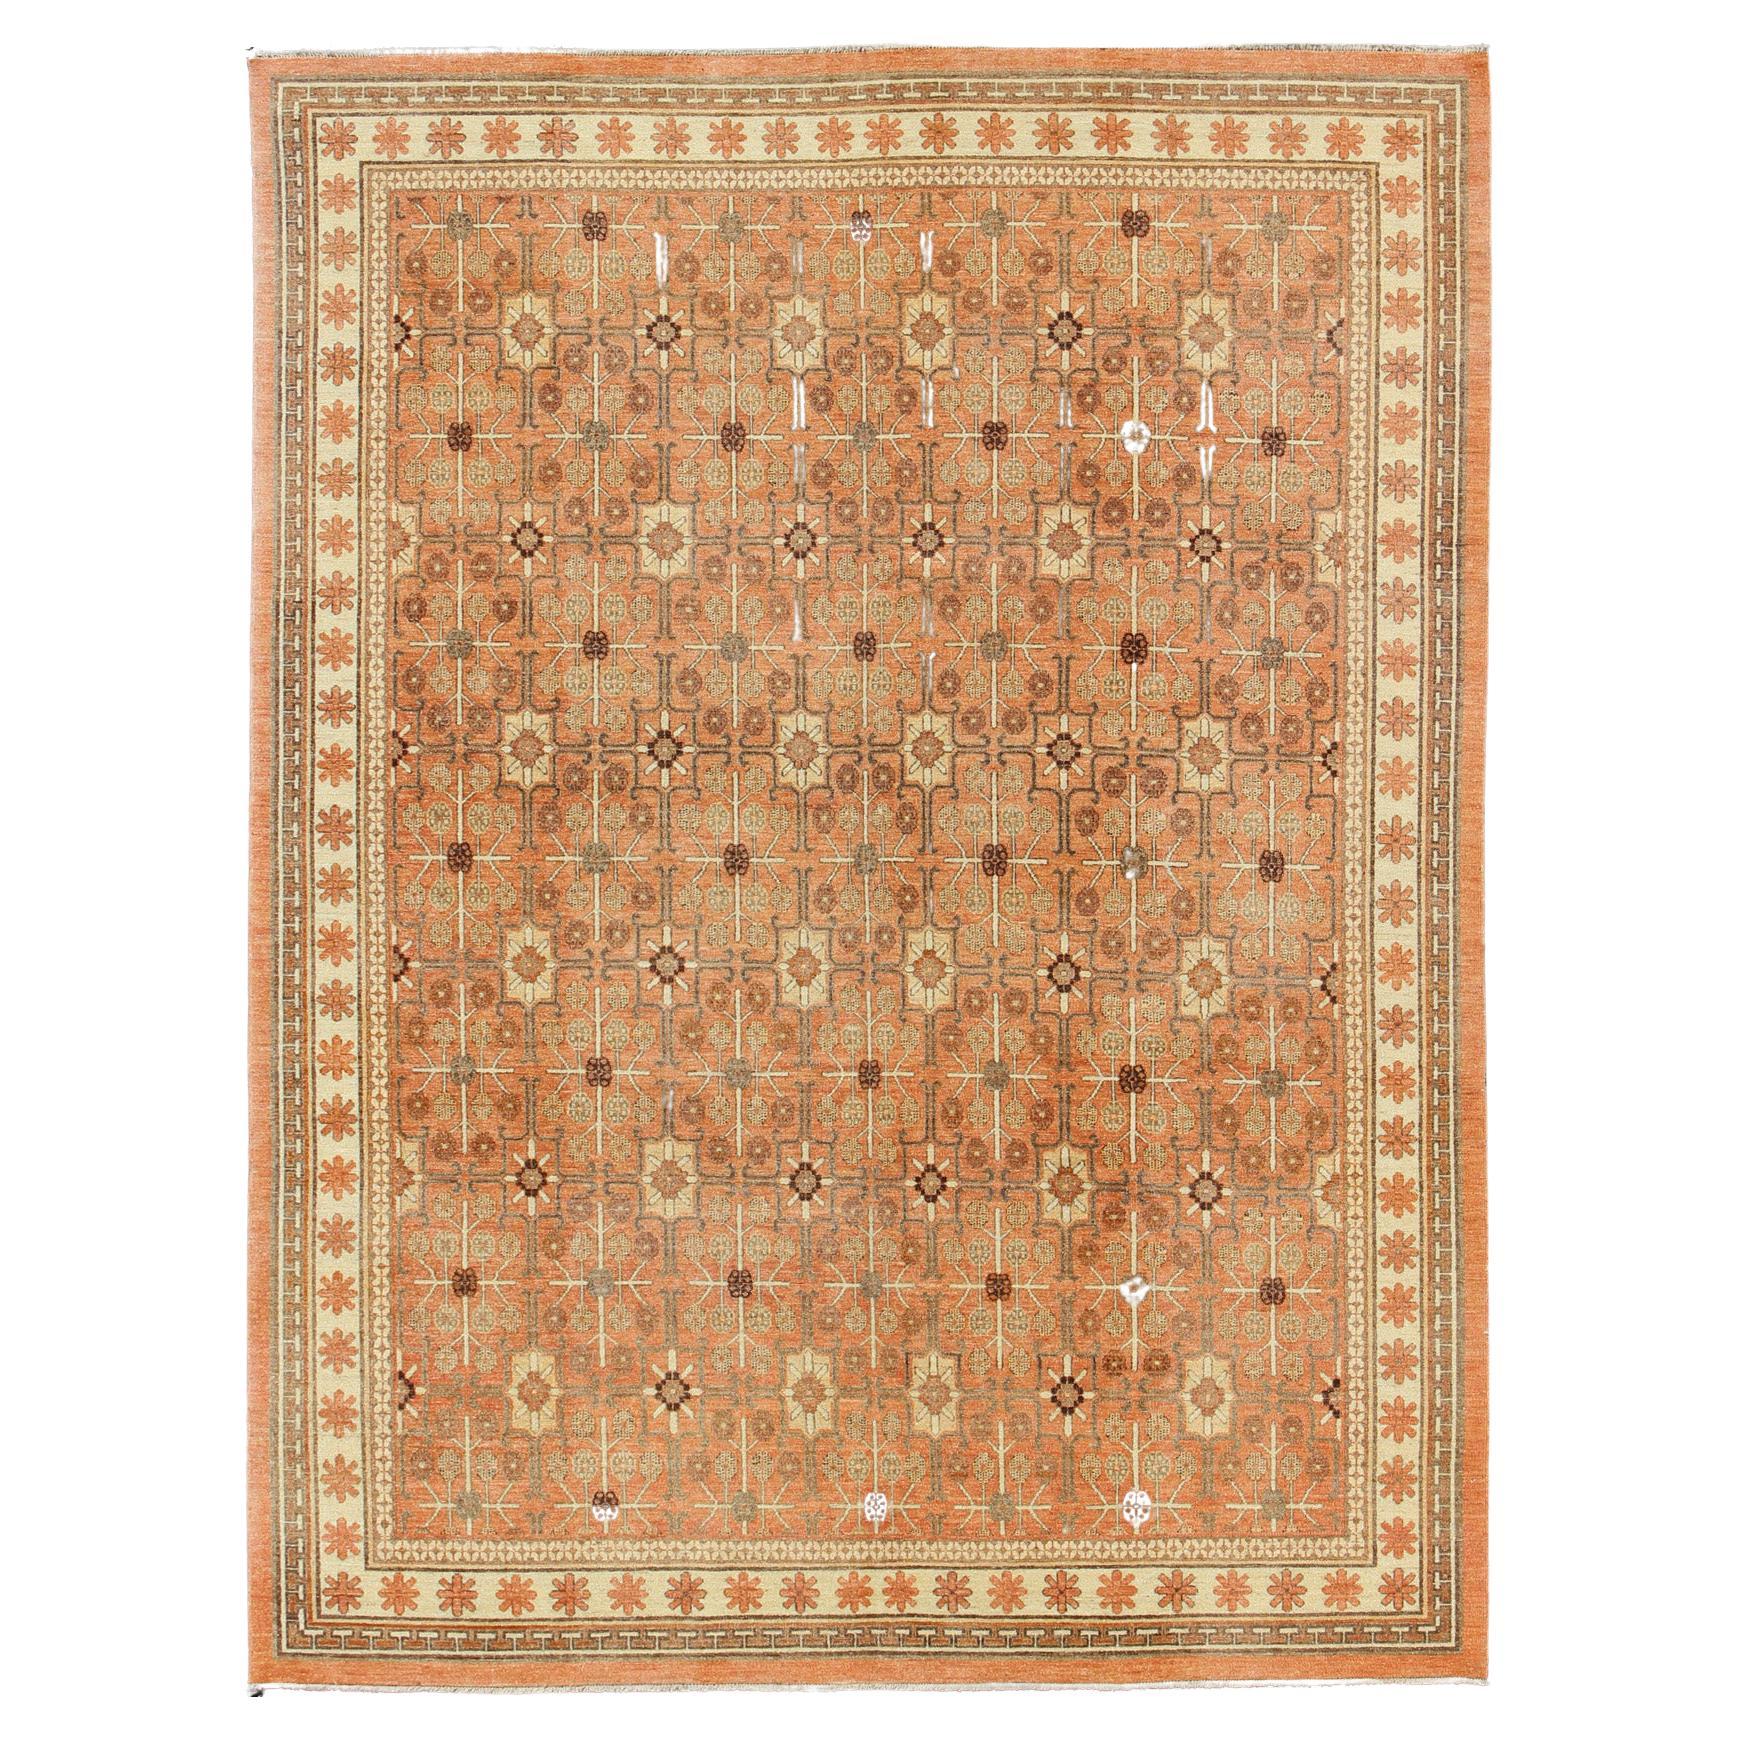 All-Over Design Khotan Rug in Light Tangerine Background. Charcoal, Brown, Green For Sale